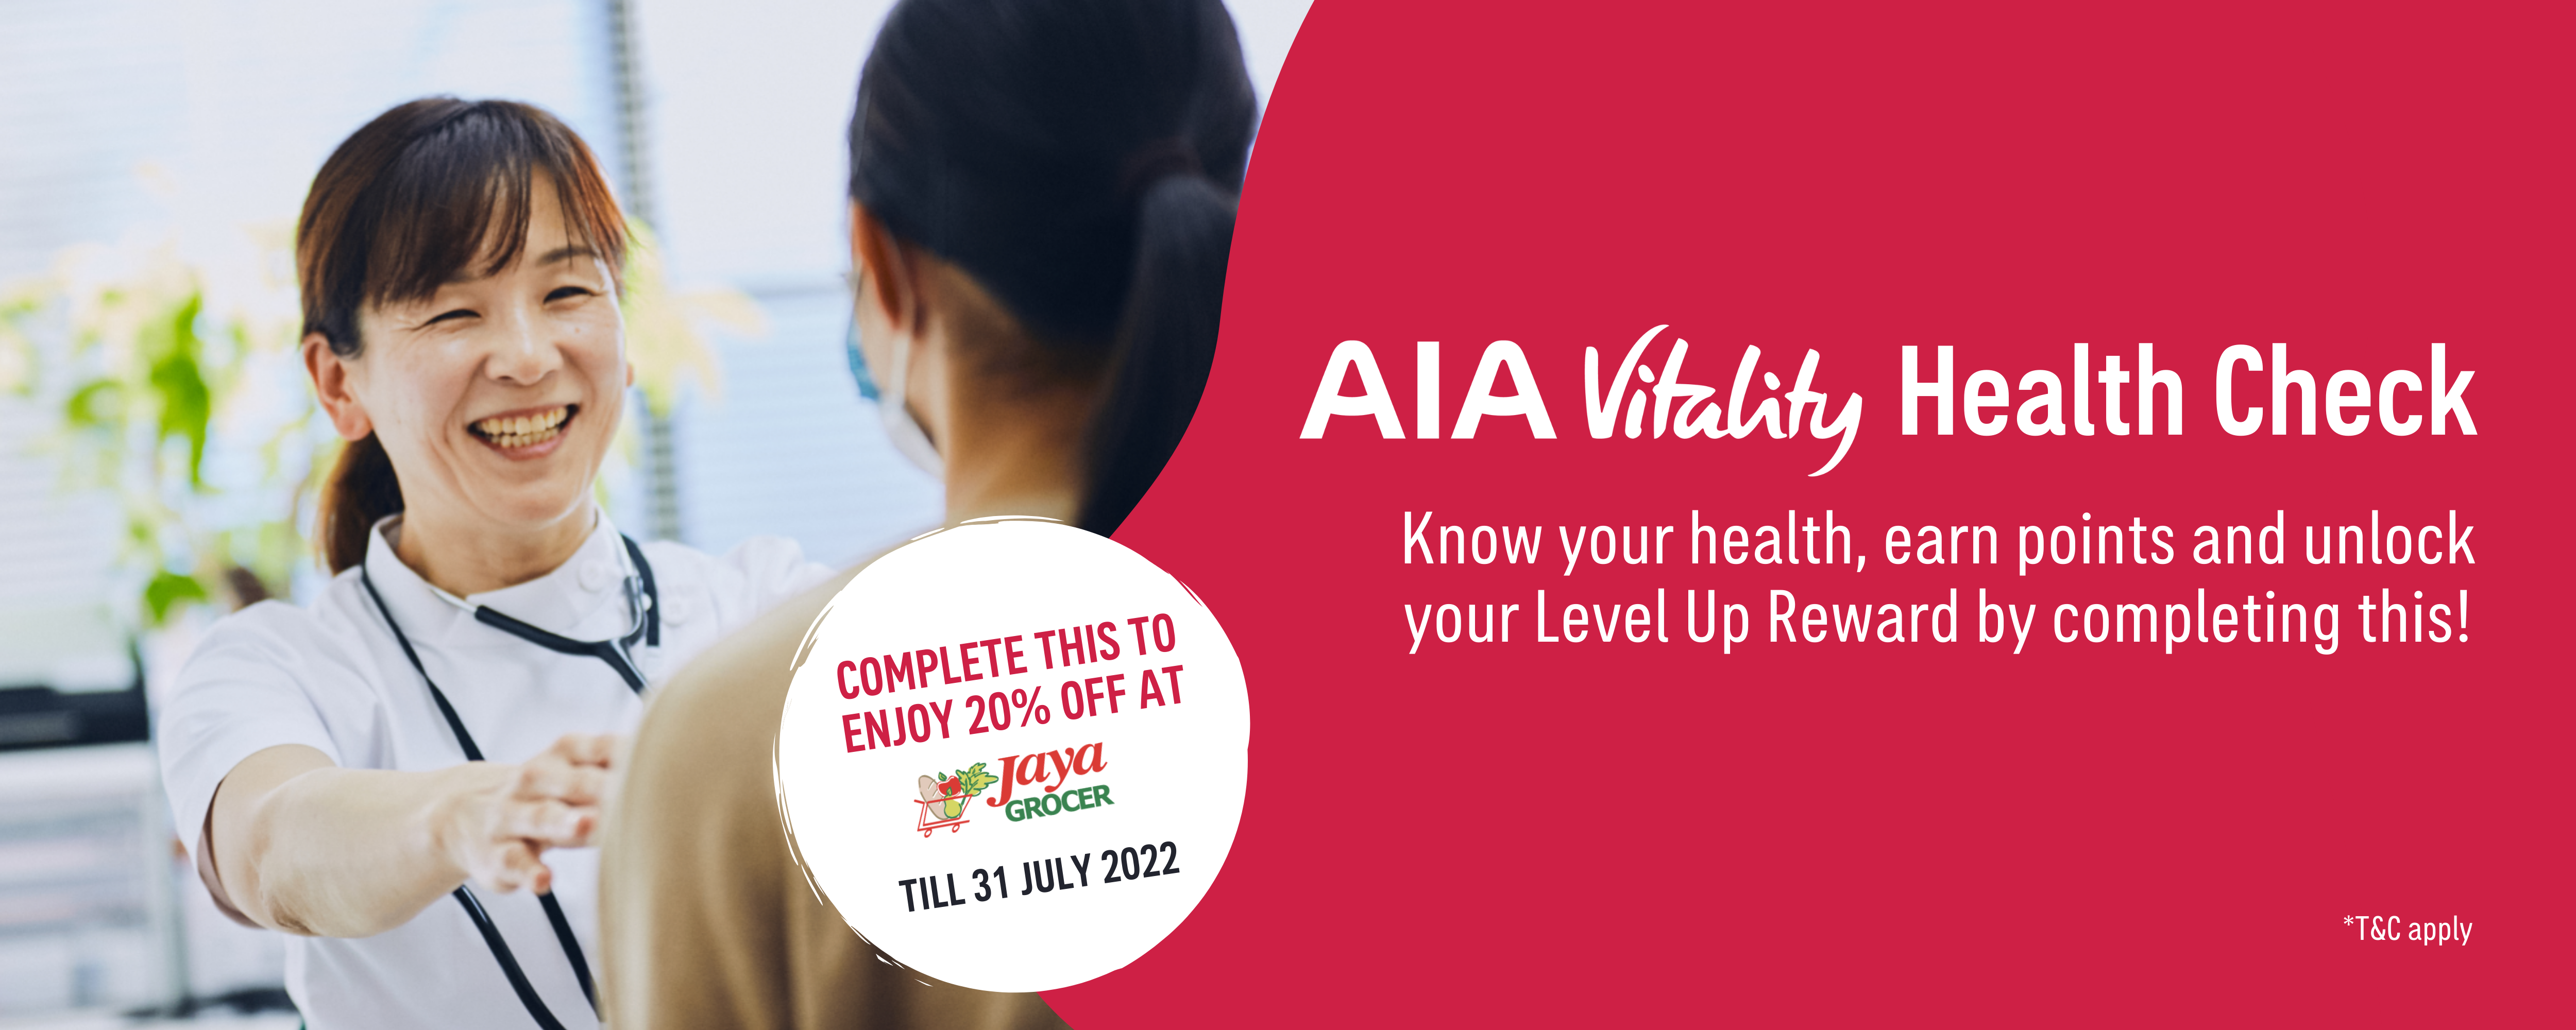 AIA Vitality Health Check